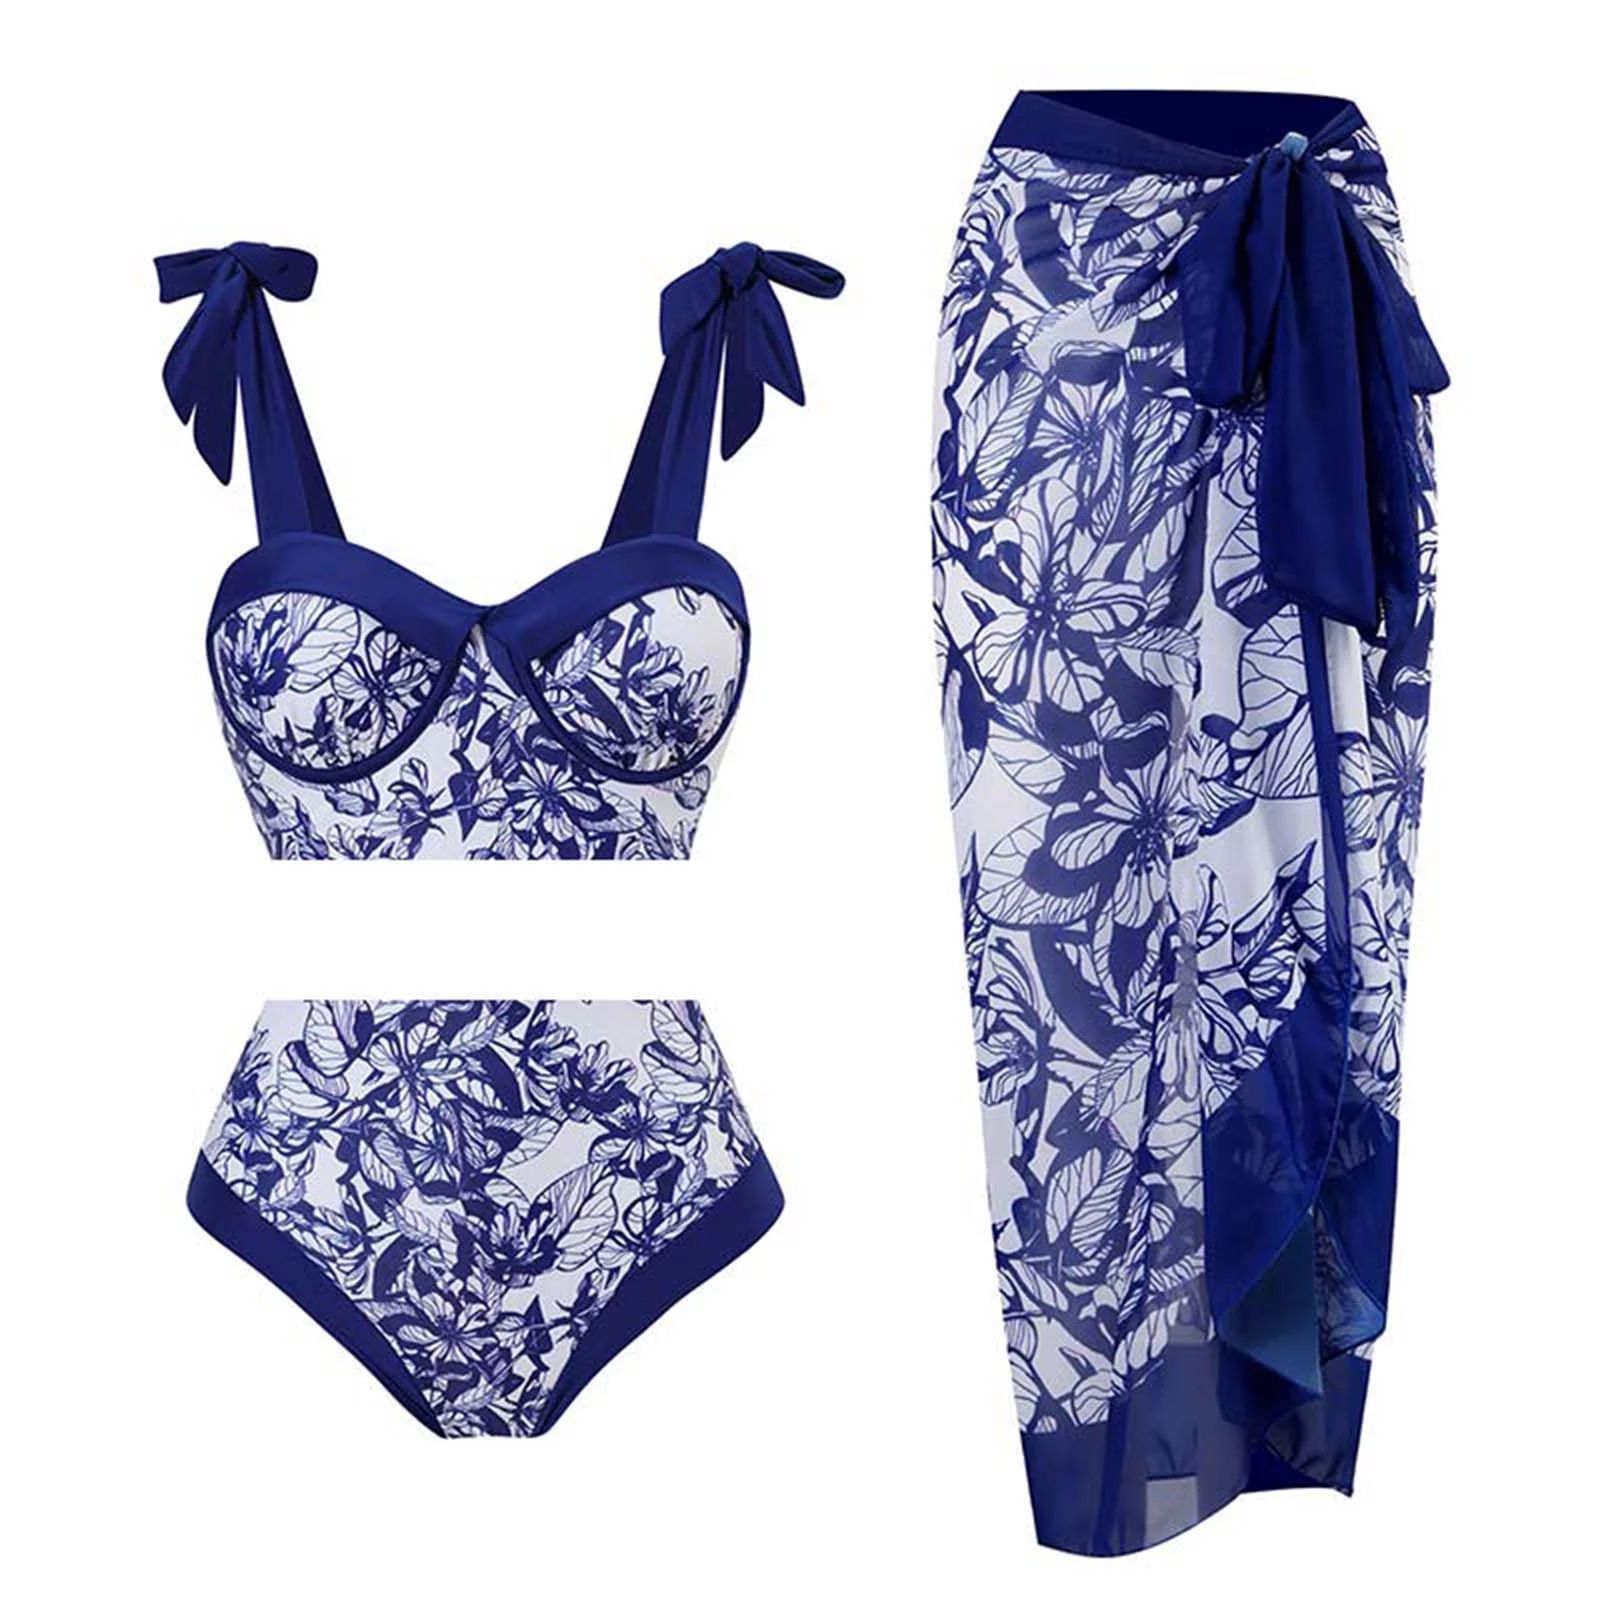 JGGSPWM Women's 3 Piece Modest Swimsuit High Waisted Bikini with Kimono Cover Up Set Blue S | Walmart (US)